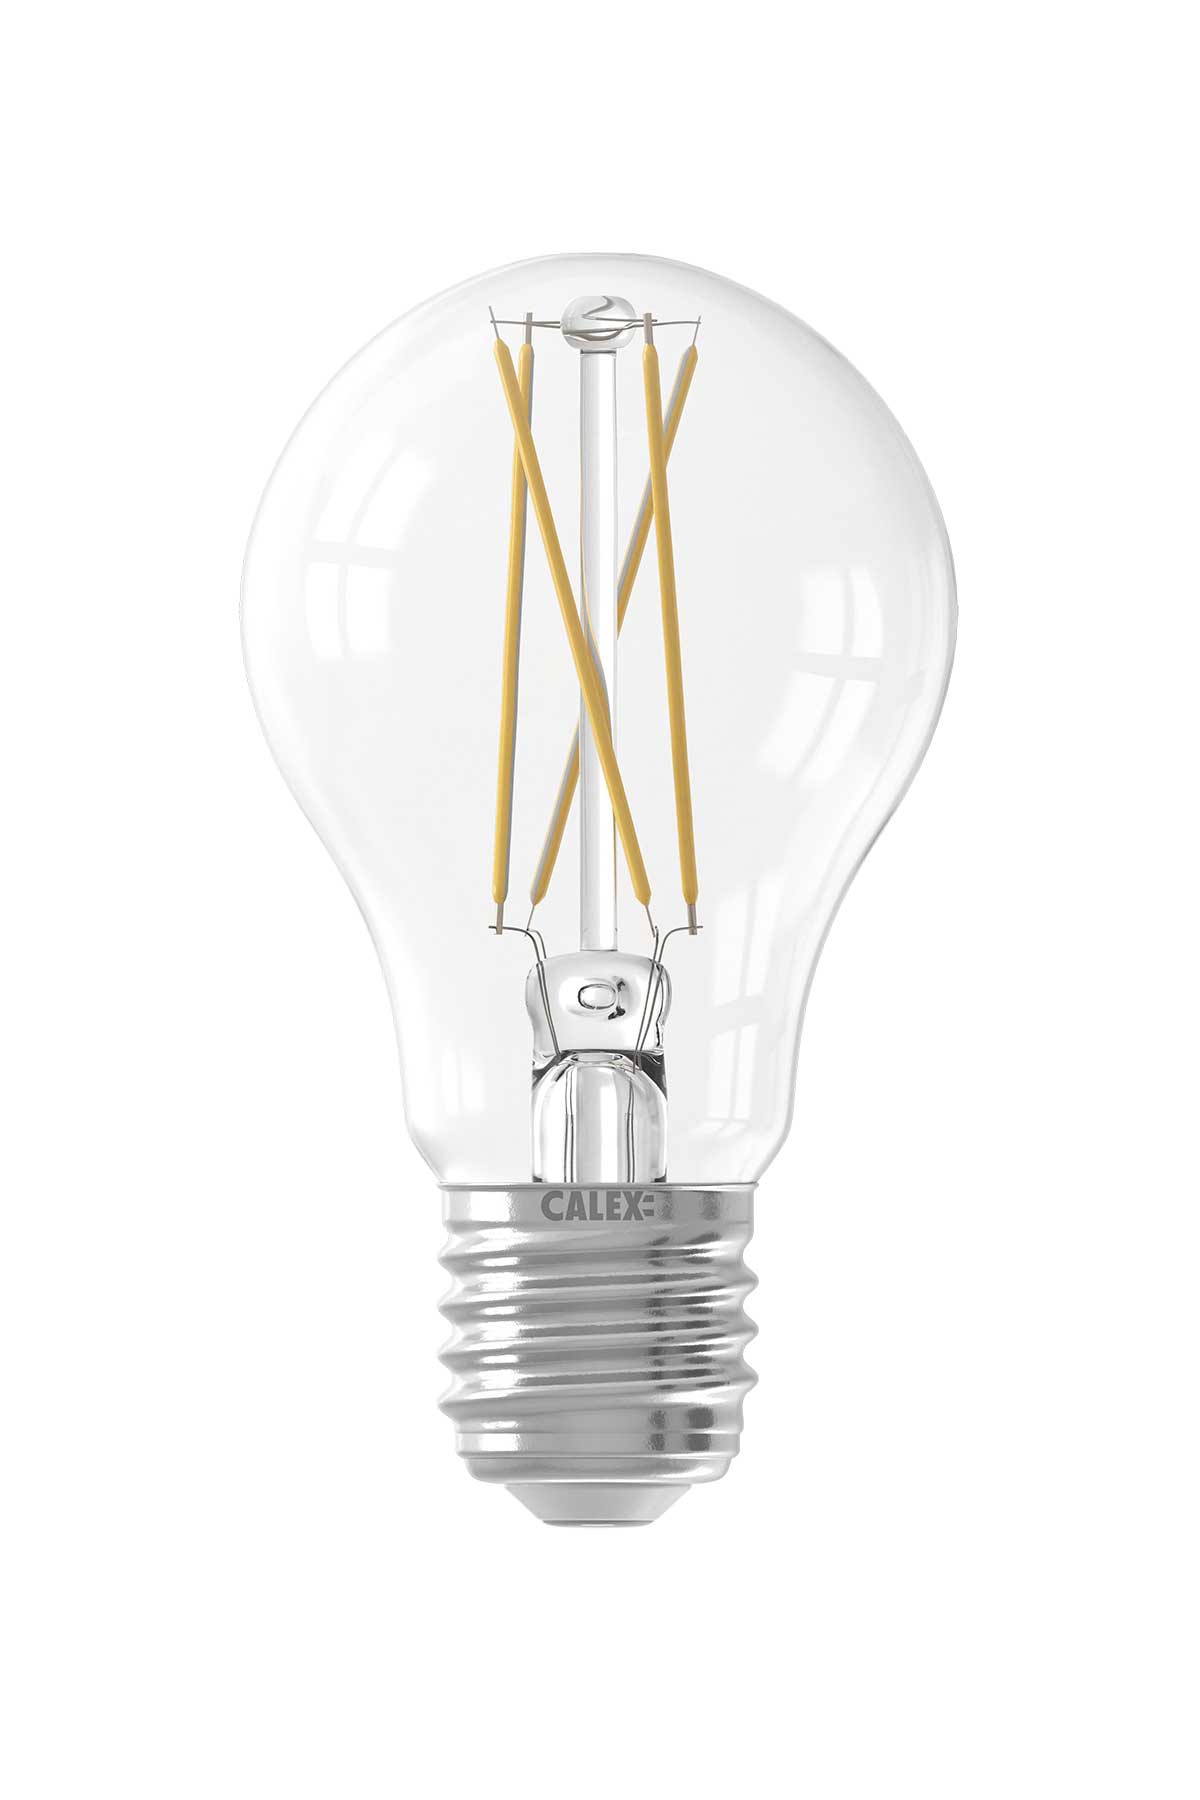 slimme led lamp calex smart standaard led lamp e27 wit 7 w 806 lm